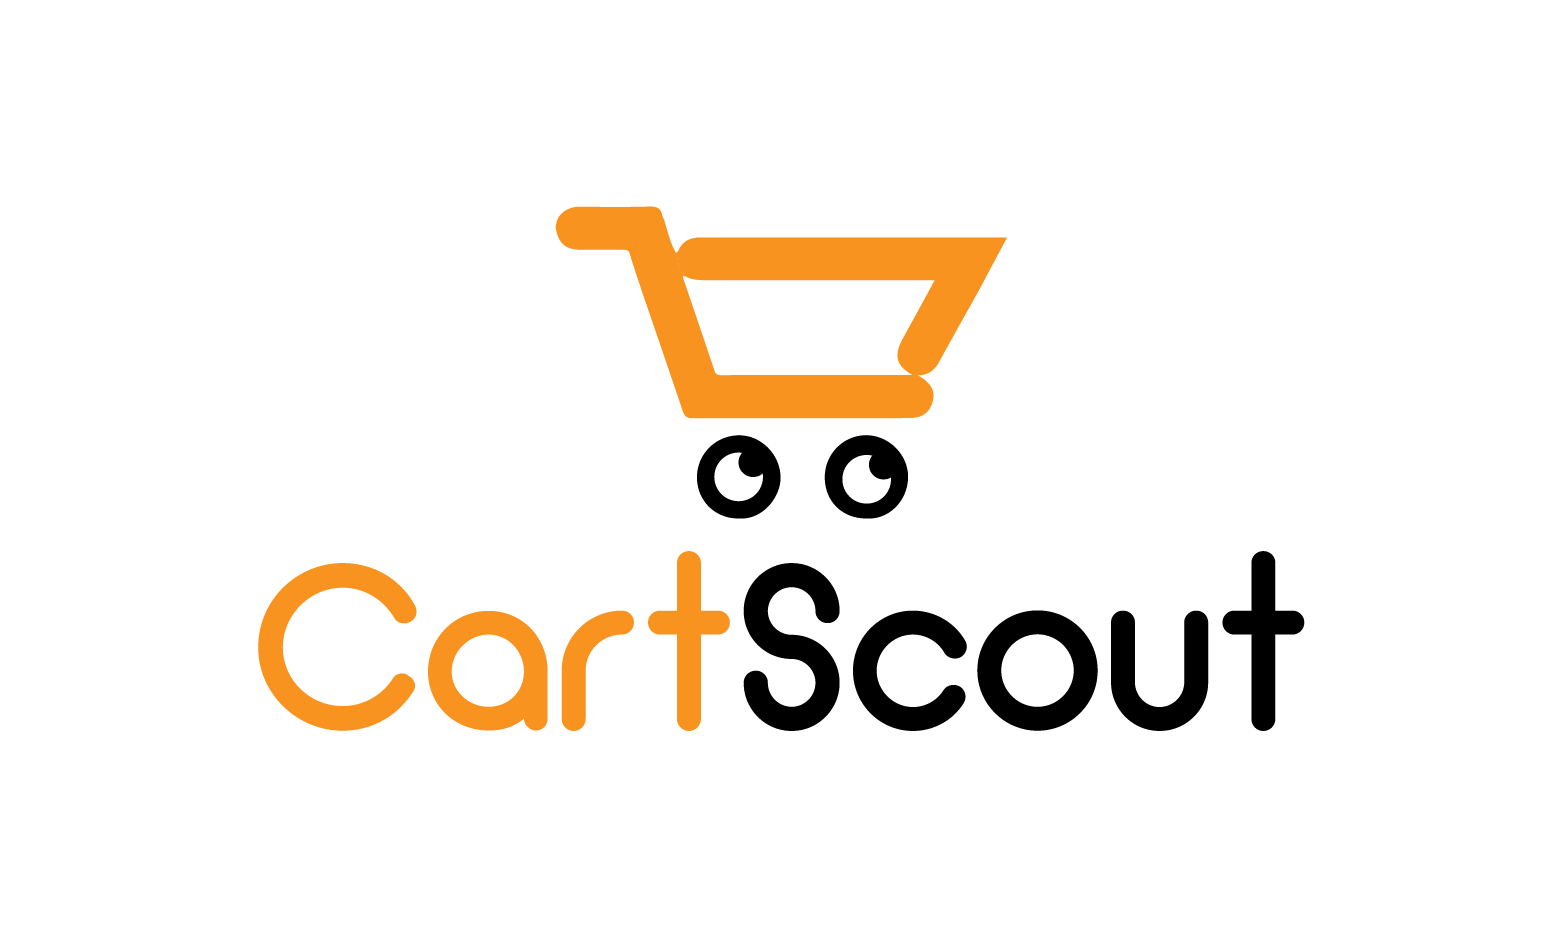 CartScout.com - Creative brandable domain for sale